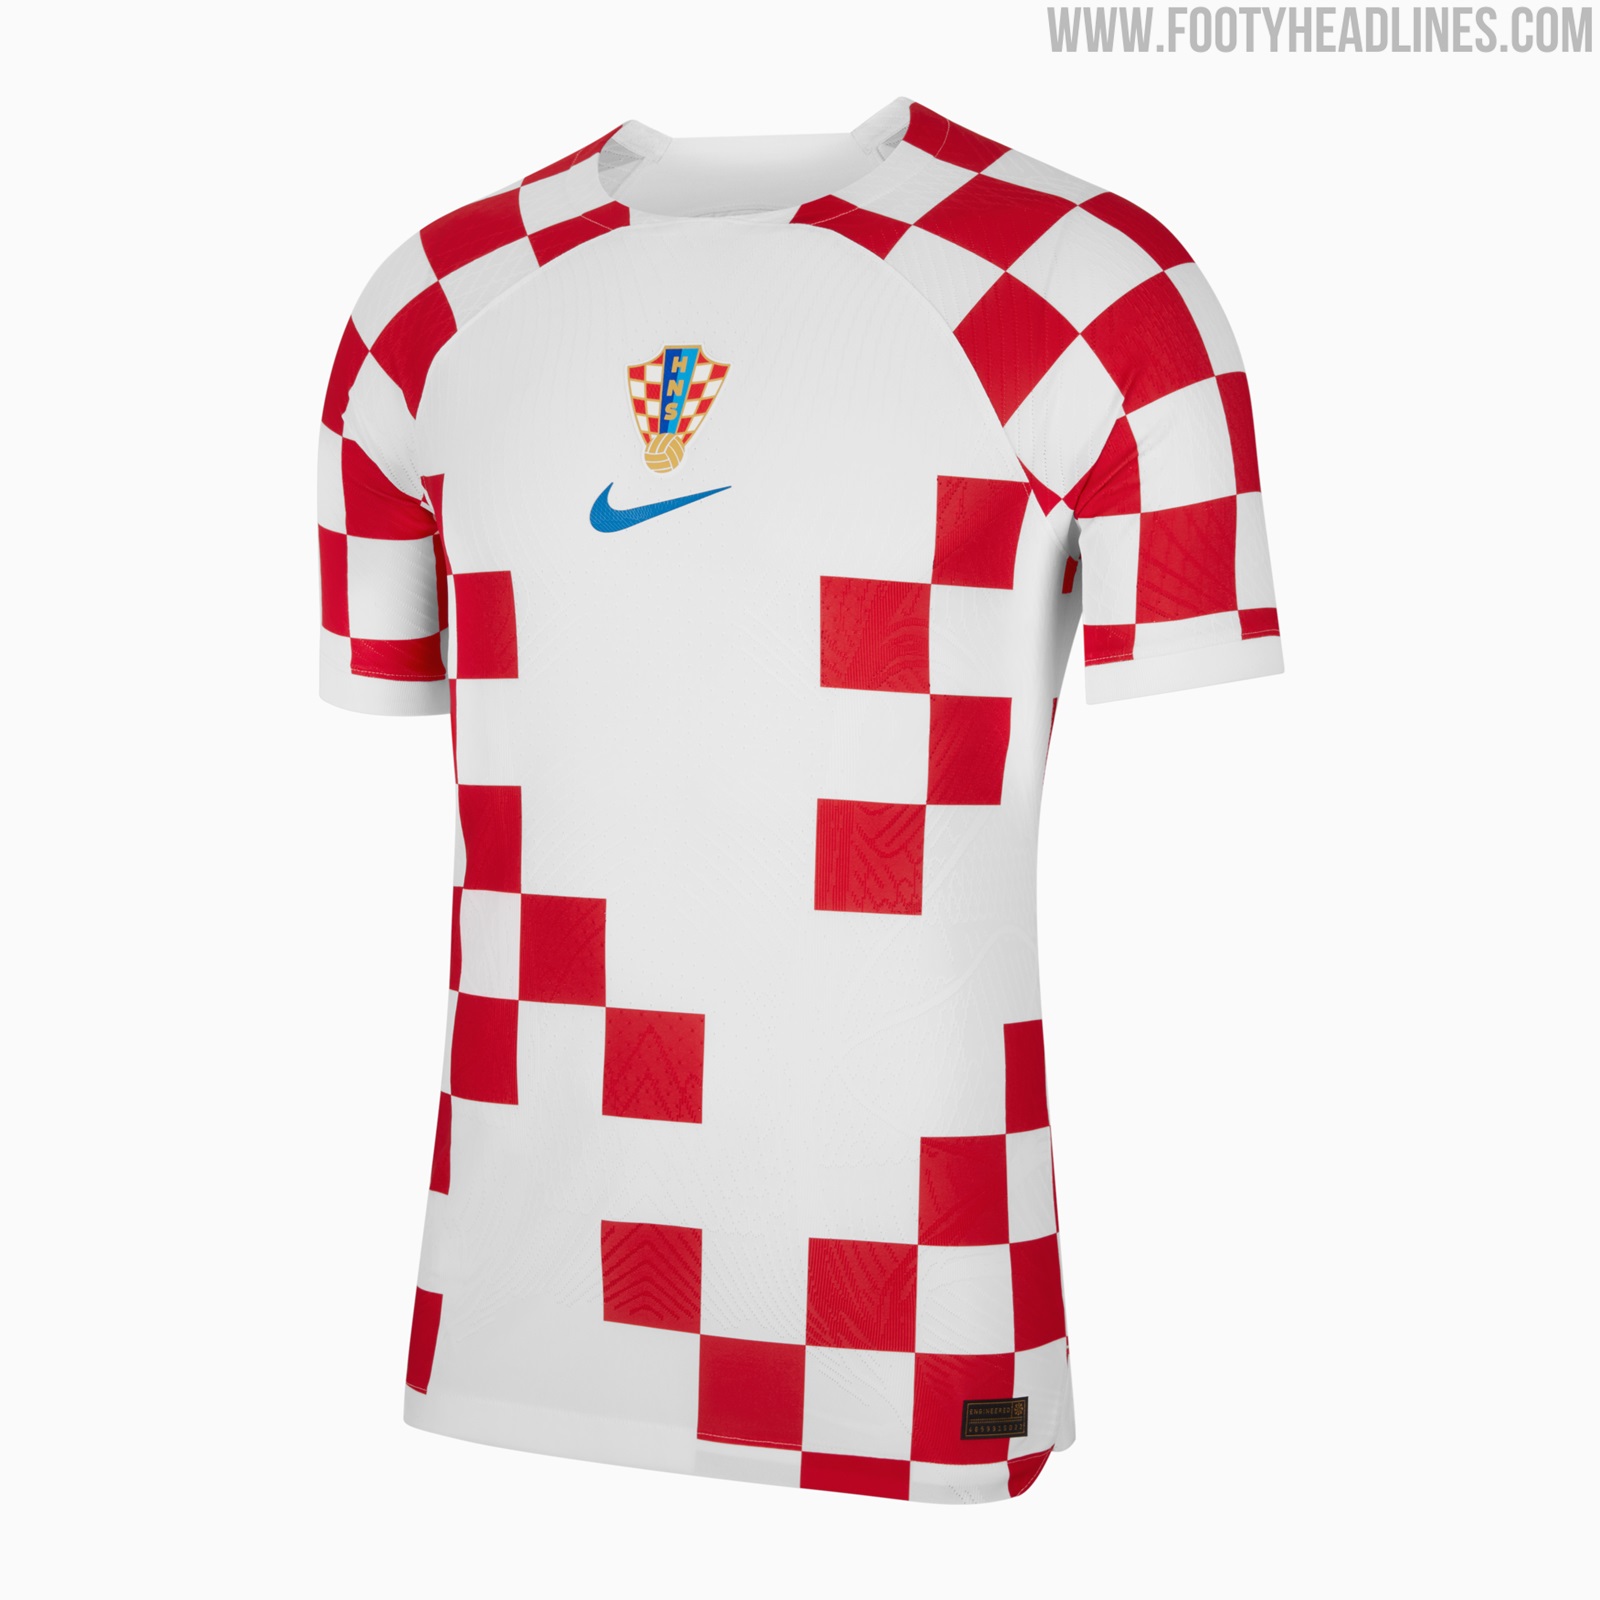 Croatia 2022 Cup Home & Away Kits Released - Footy Headlines